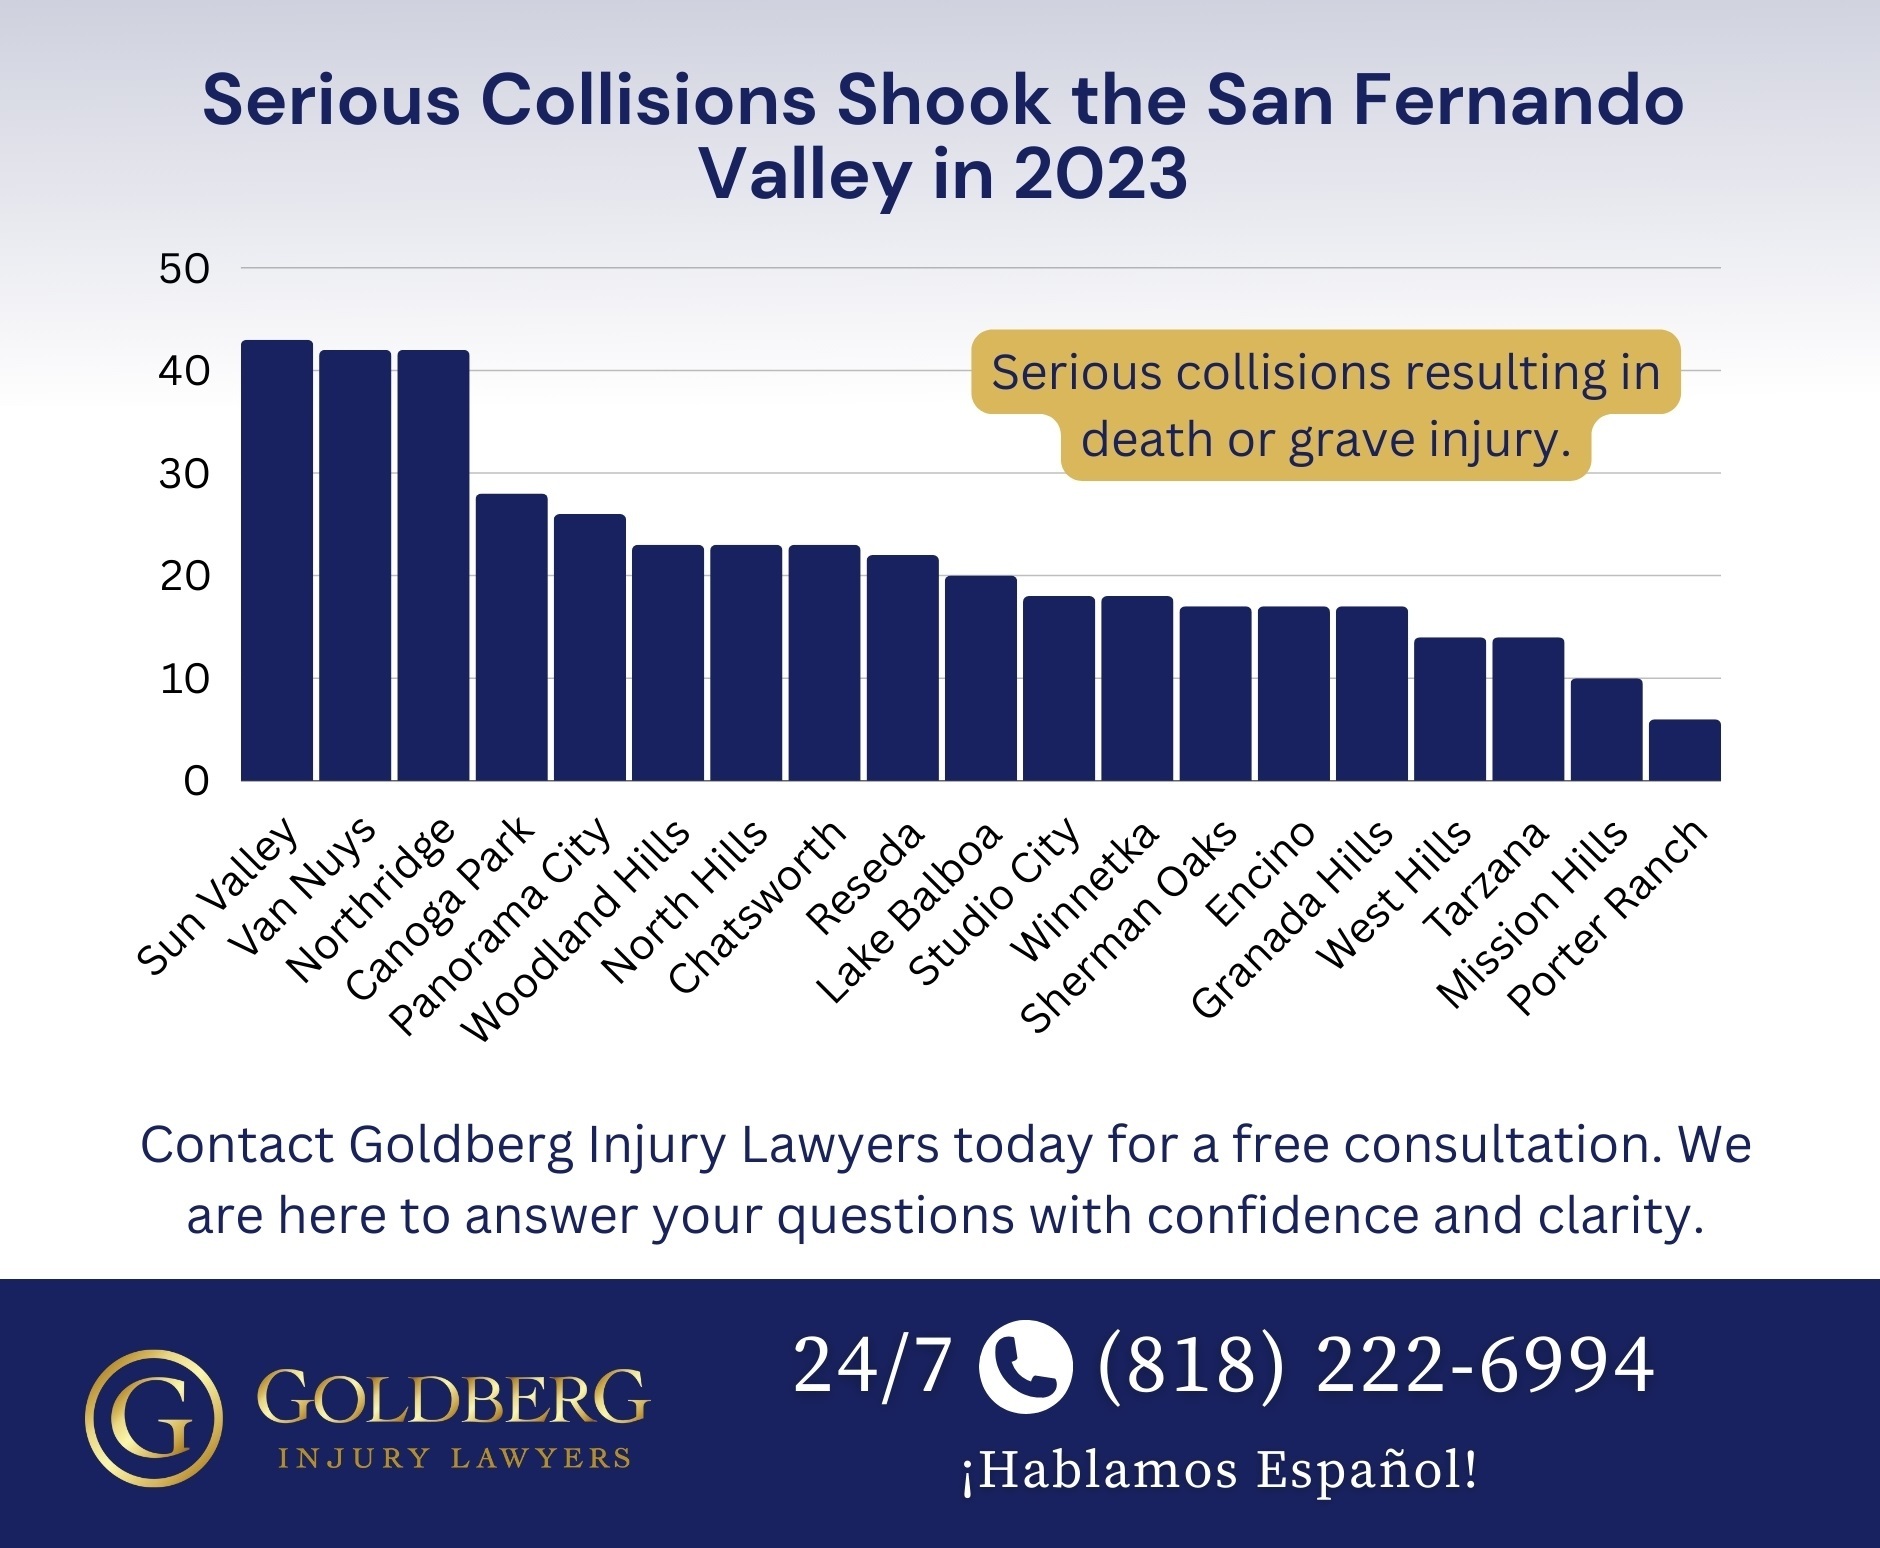 Serious collisions San Fernando Valley 2023